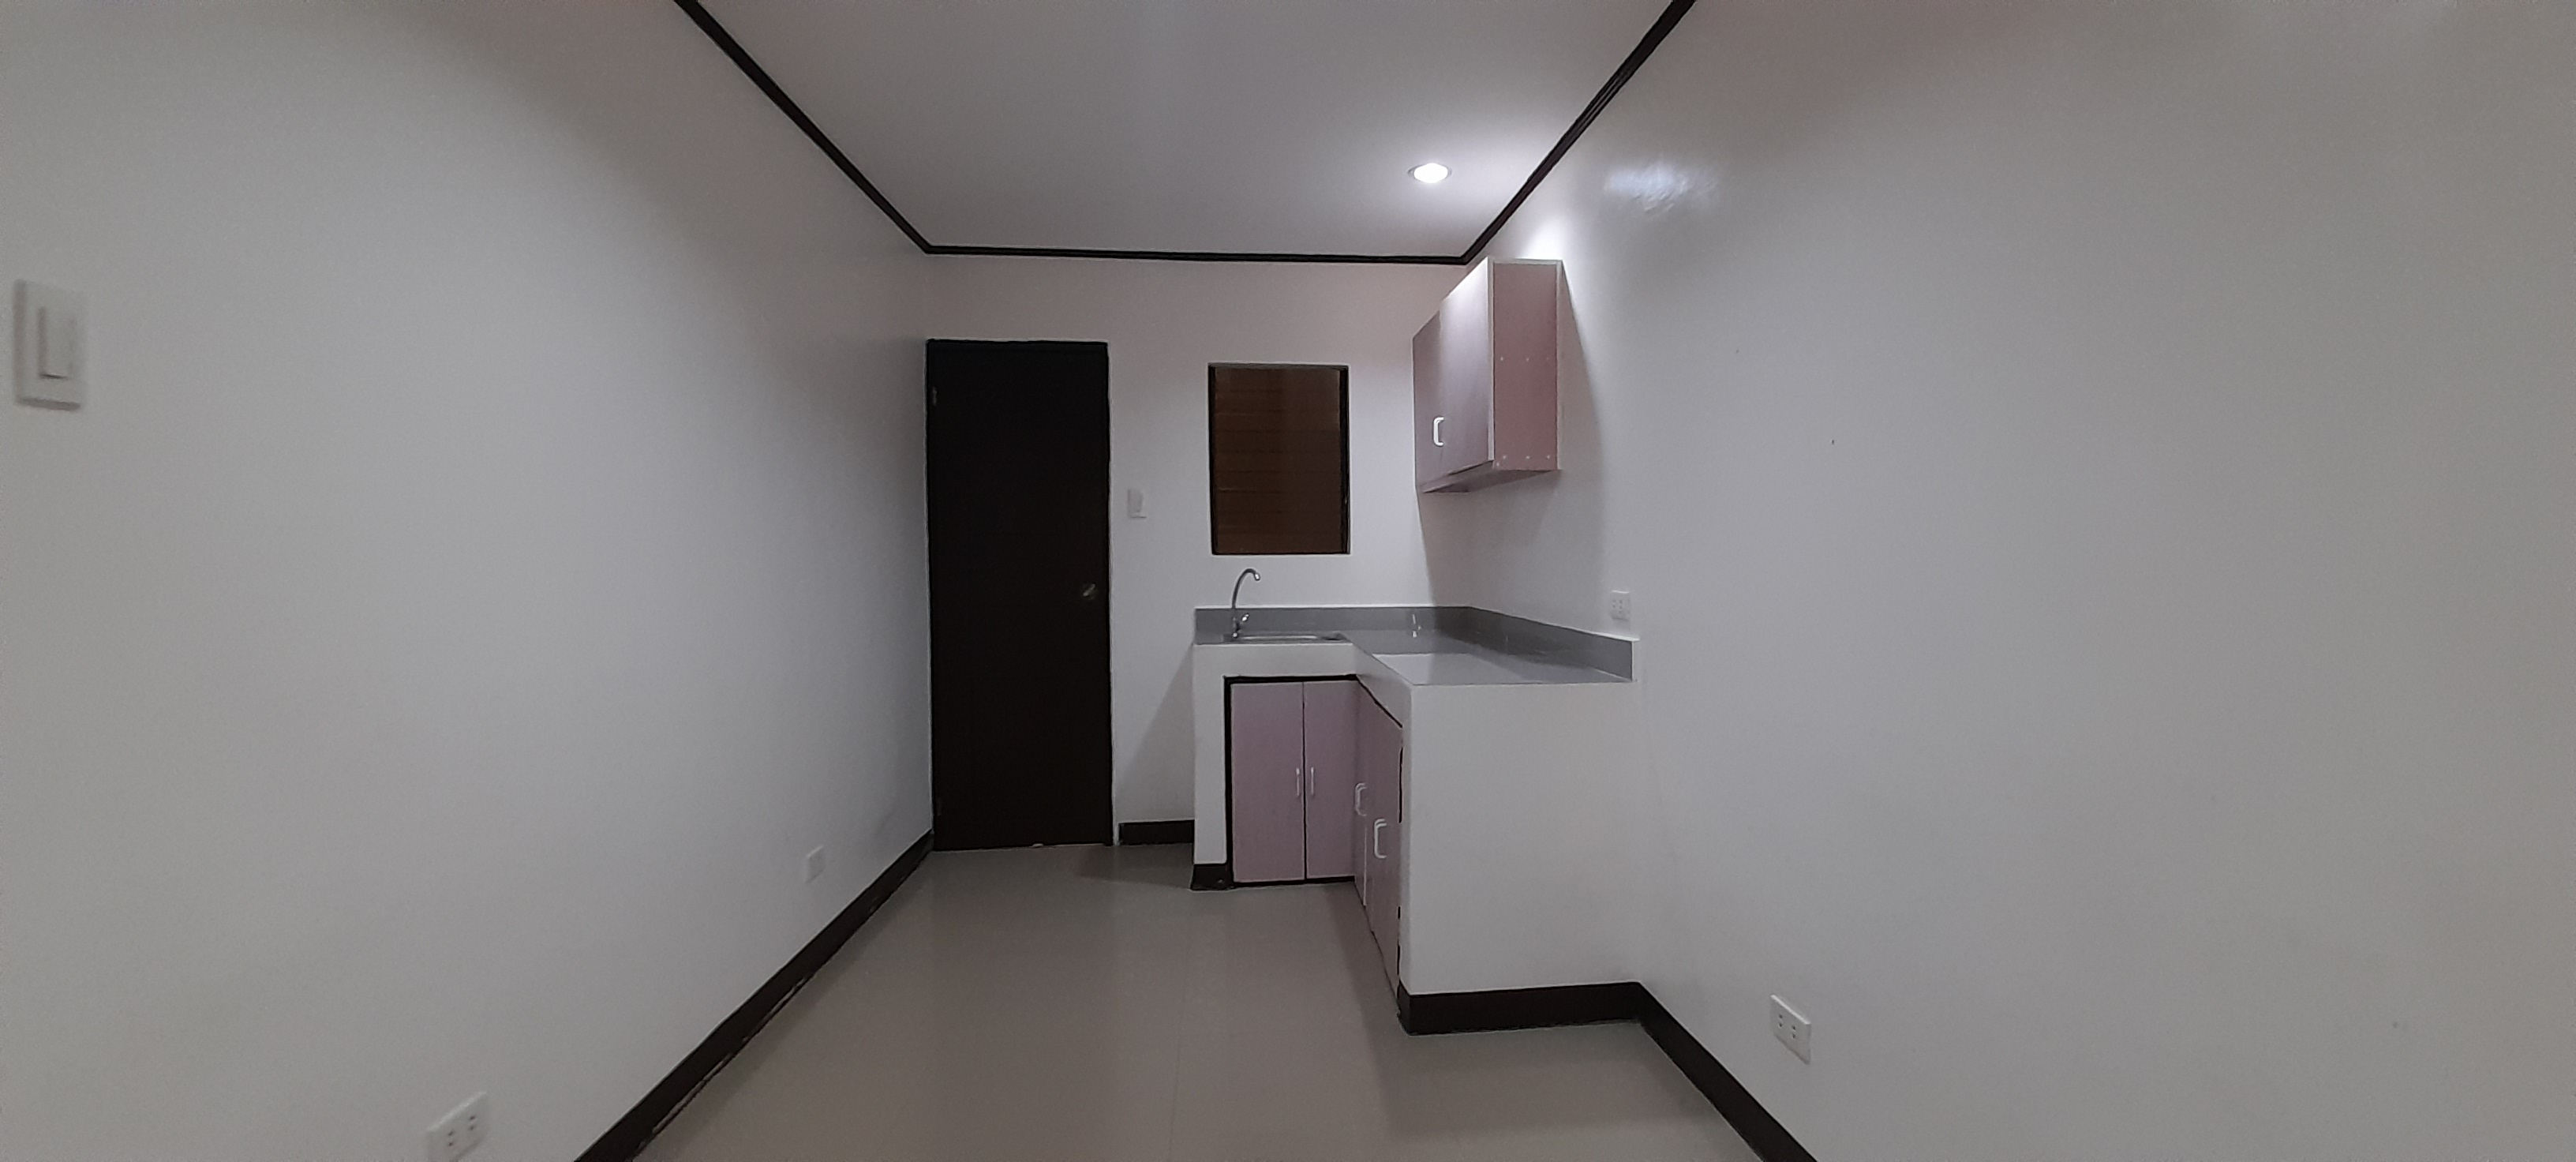 2-bedroom-unfurnished-apartment-in-casuntingan-mandaue-city